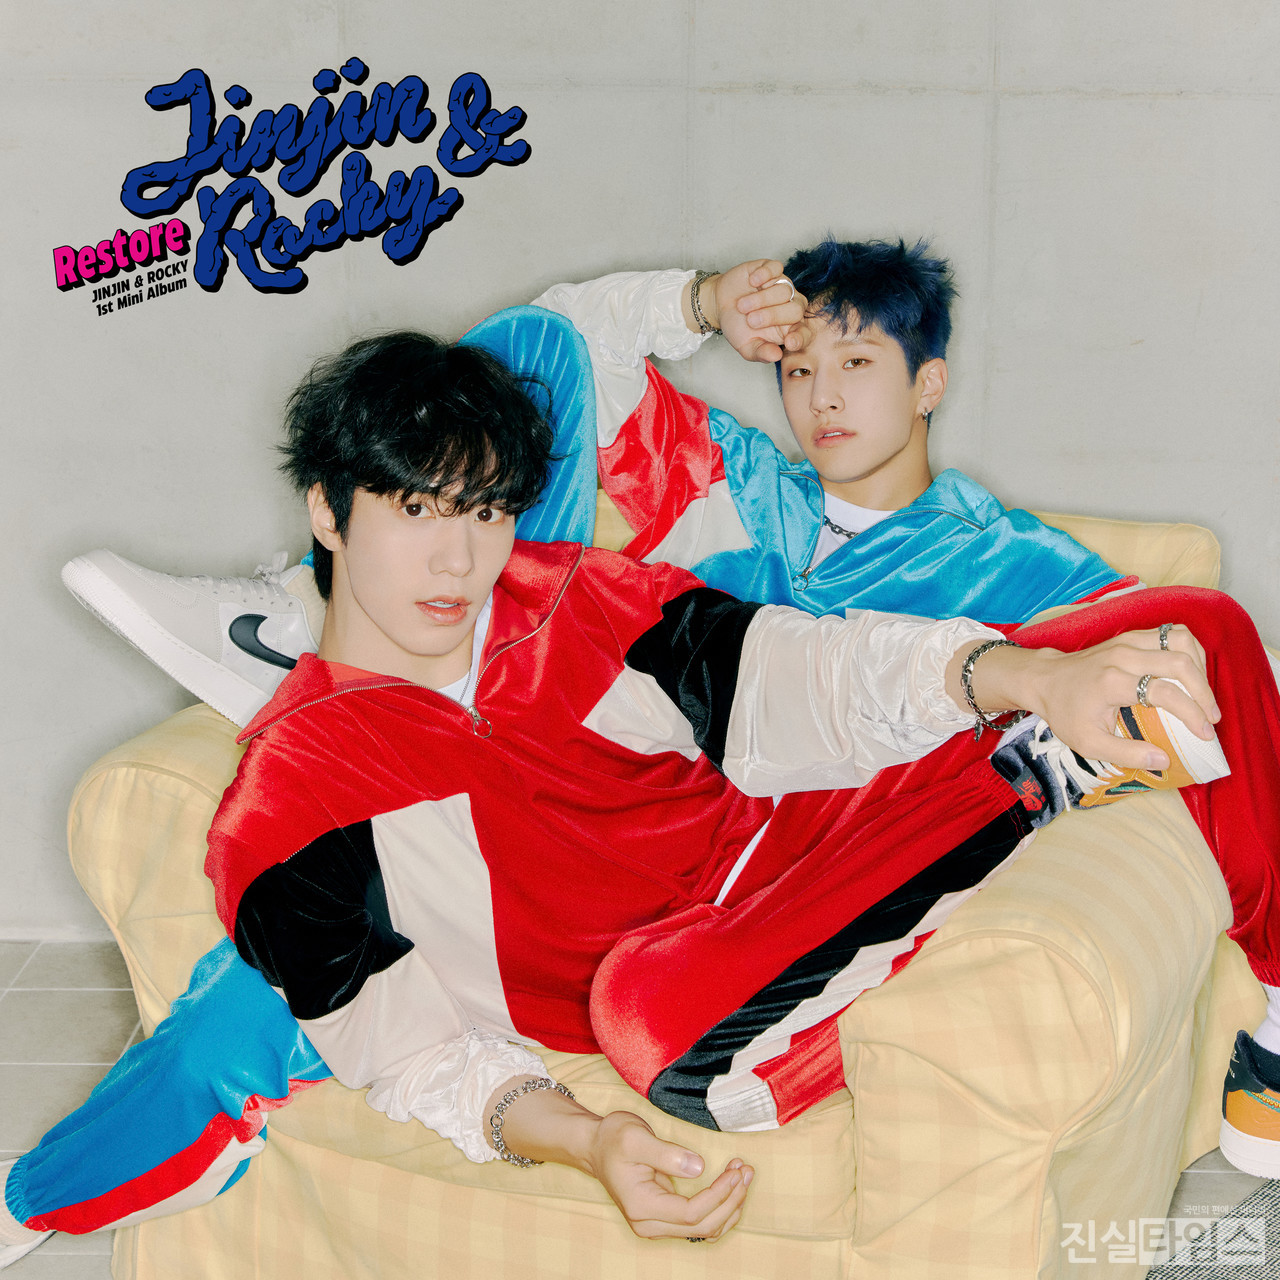 JINJIN &amp; ROCKY Restore cover artwork